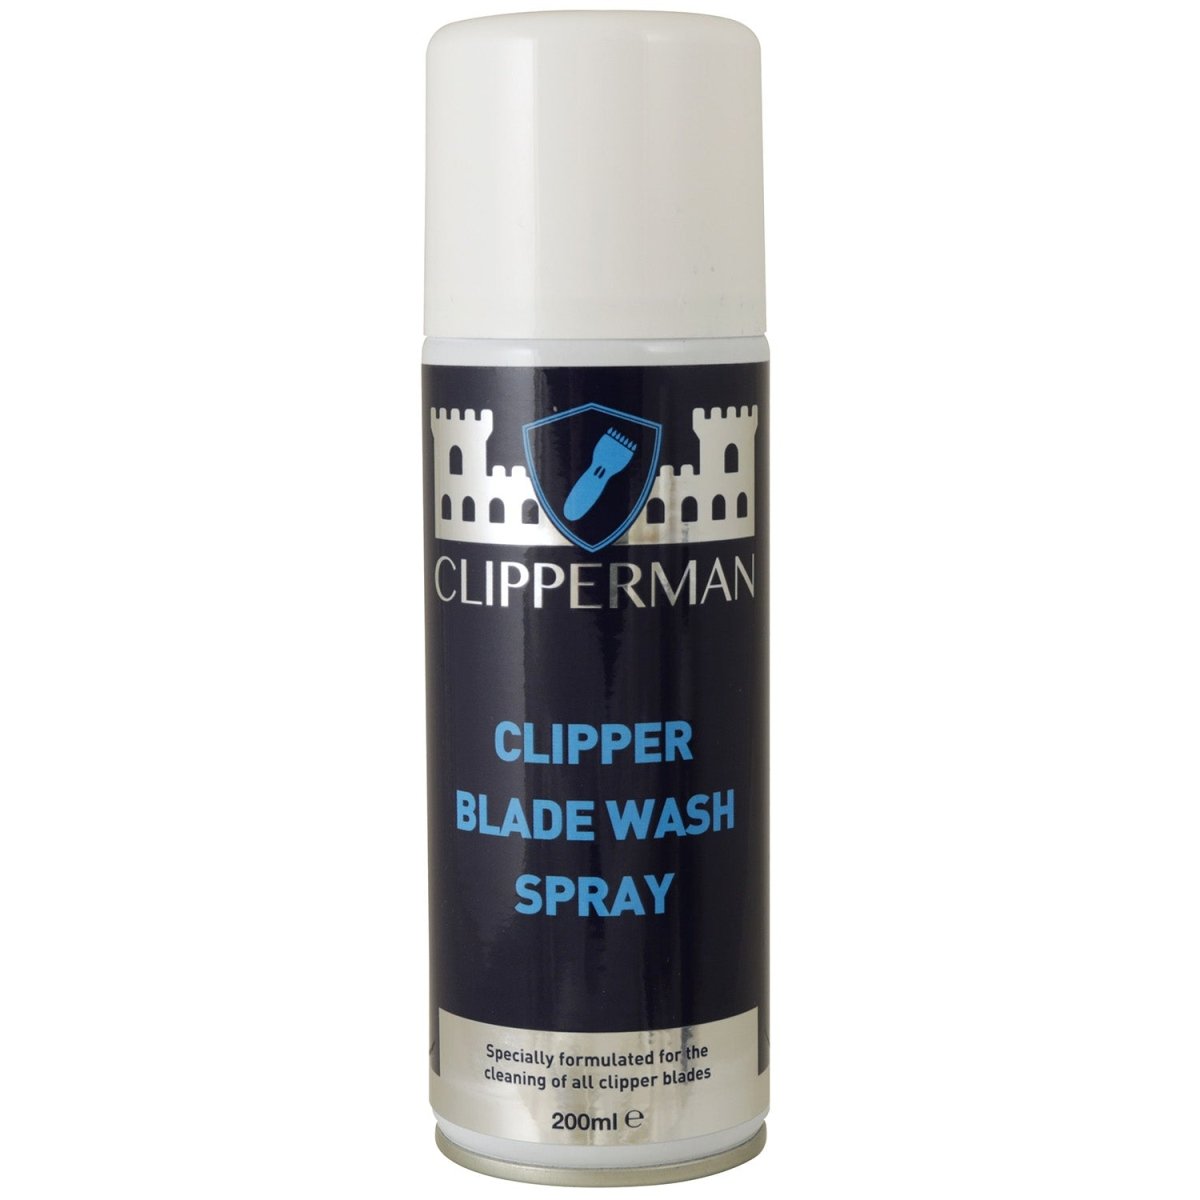 Clipperman Clipper Blade Wash Spray - 200Ml -